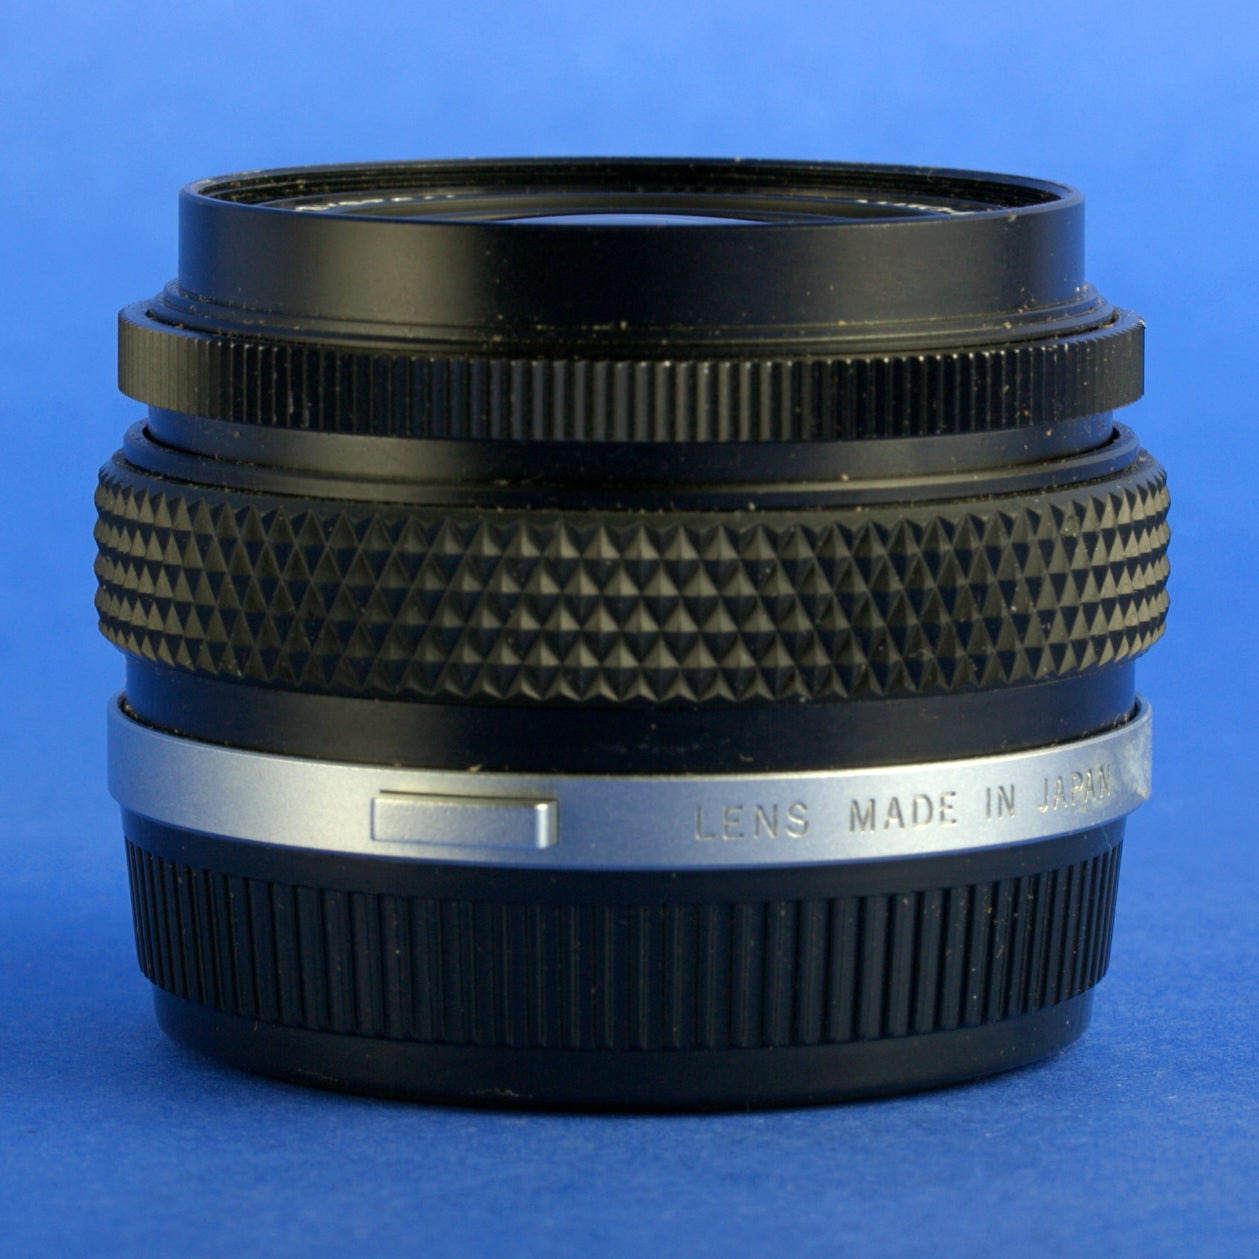 Olympus OM 35mm 2.8 Zuiko Lens